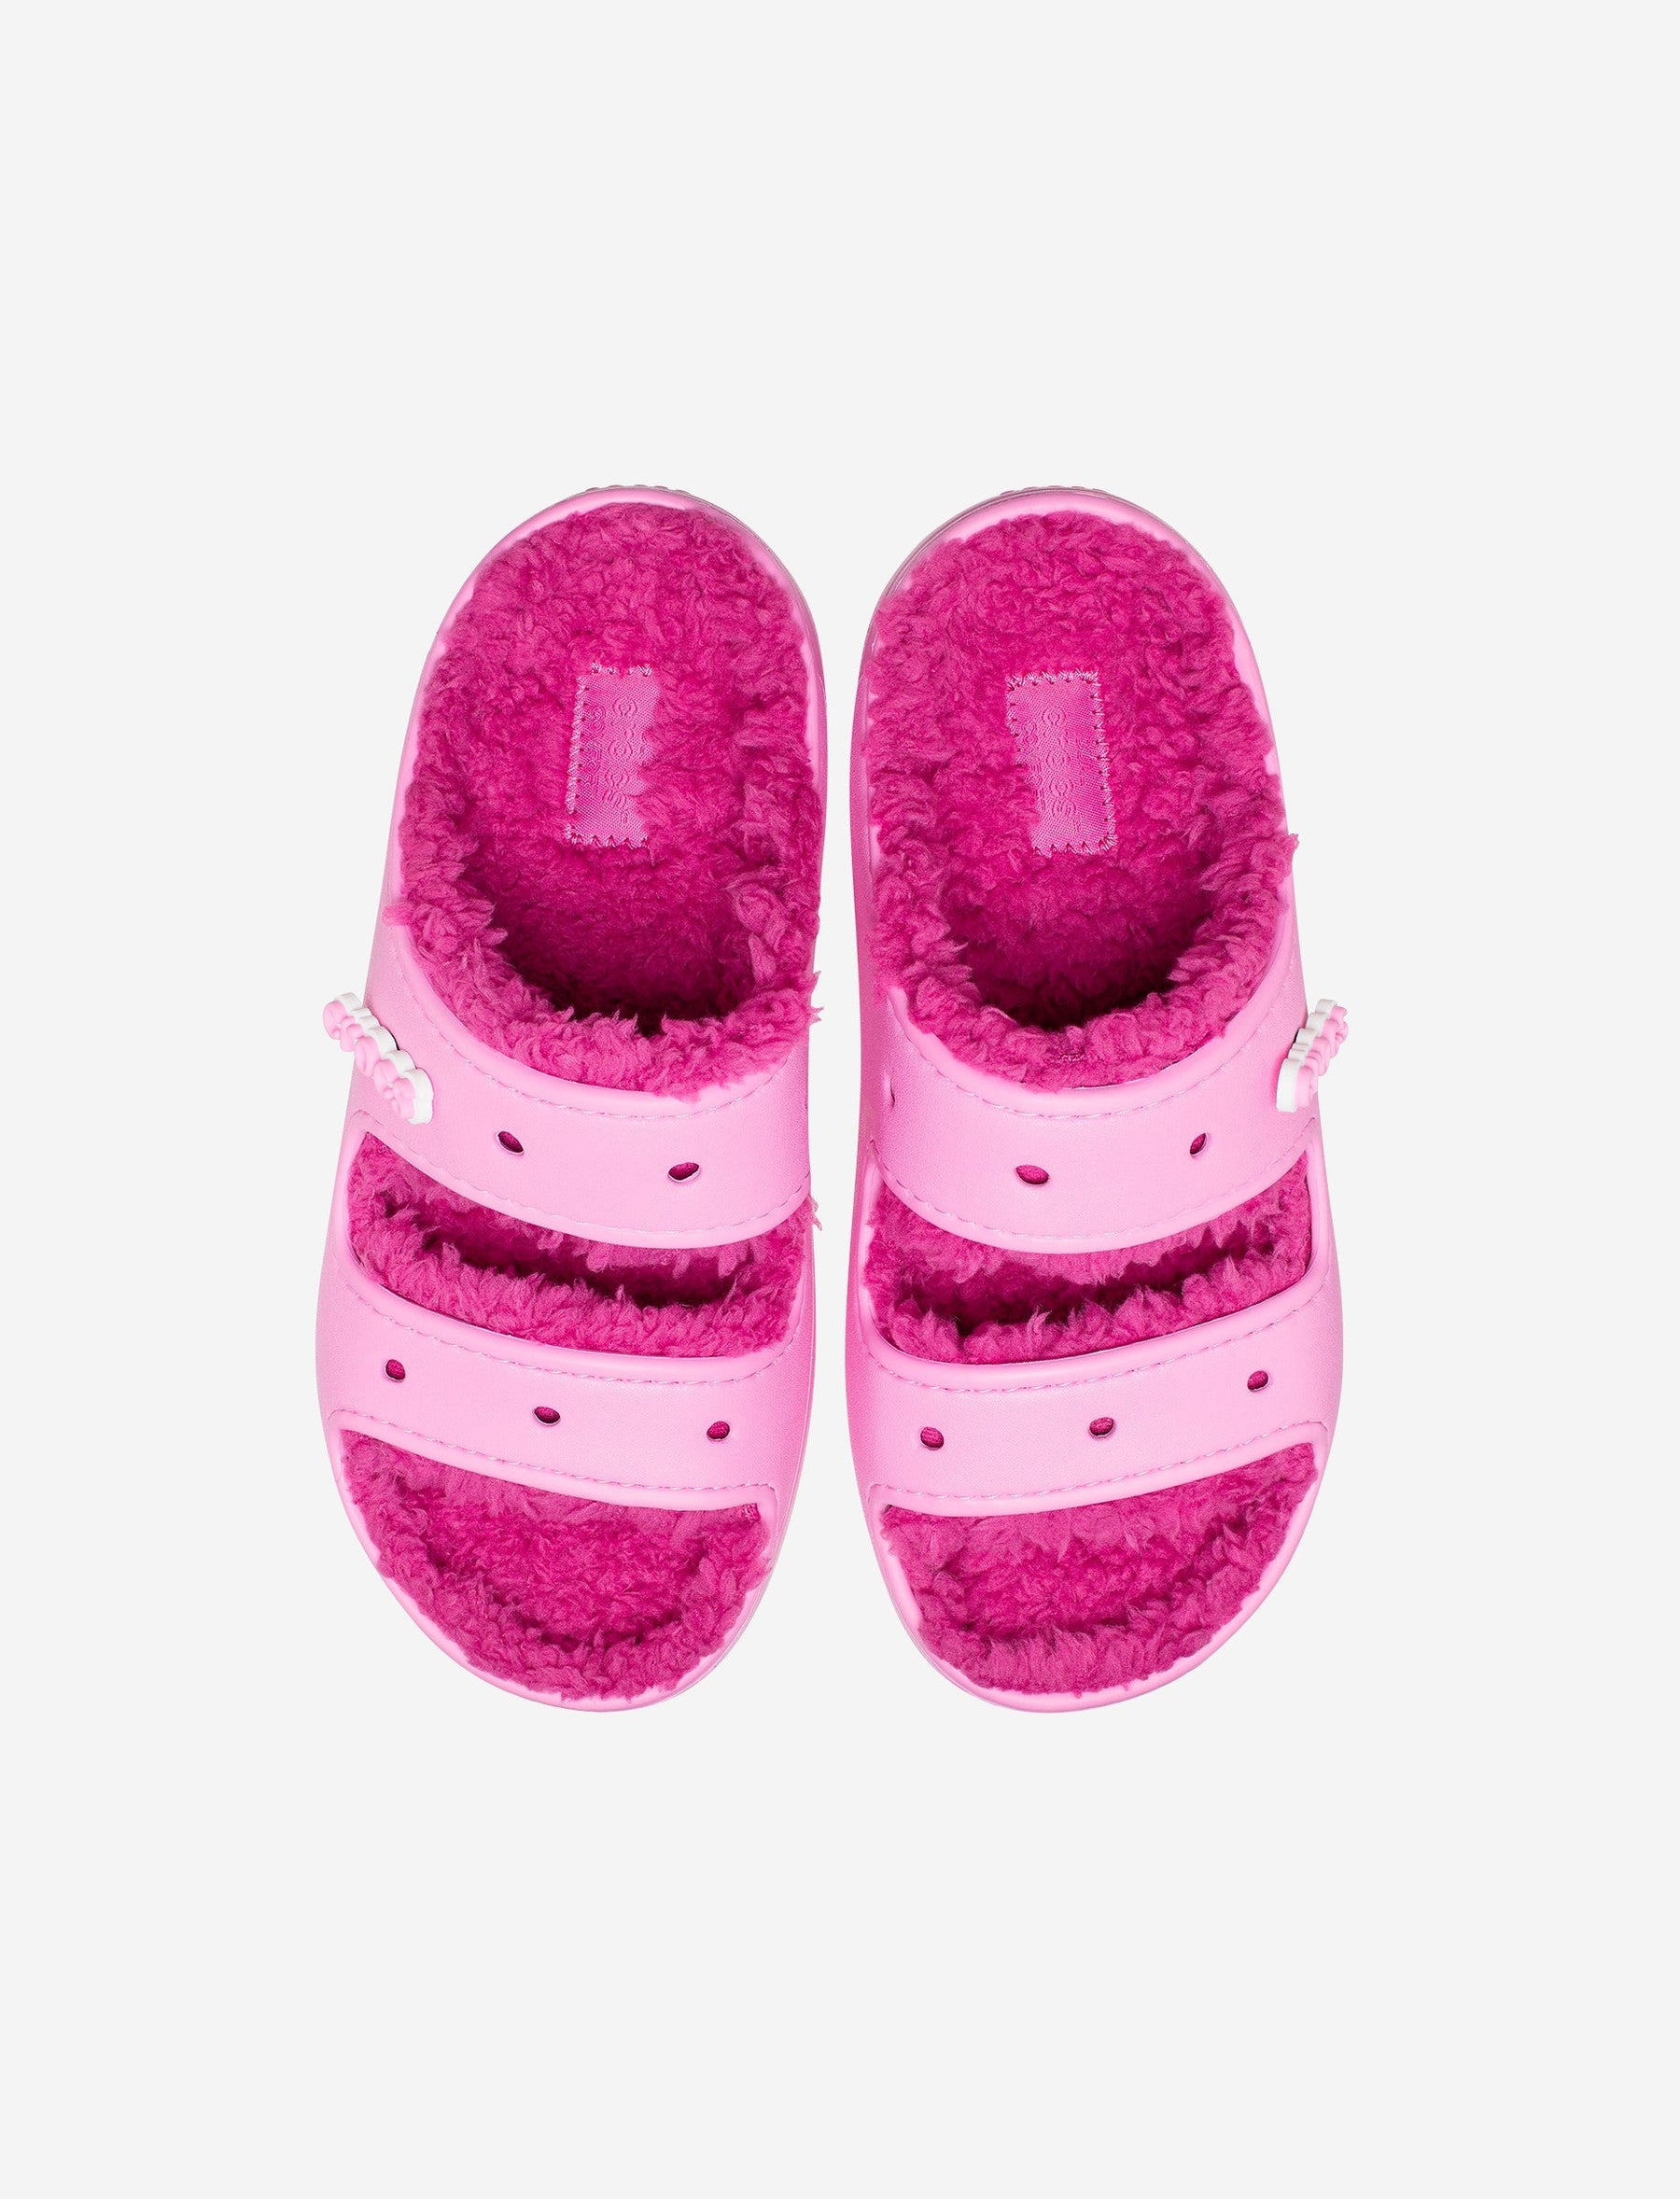 Crocs Classic Cozzzy Sandal -כפכפי קרוקס פרווה לנשים בצבע ורוד טאפי-Crocs-36-37-נאקו